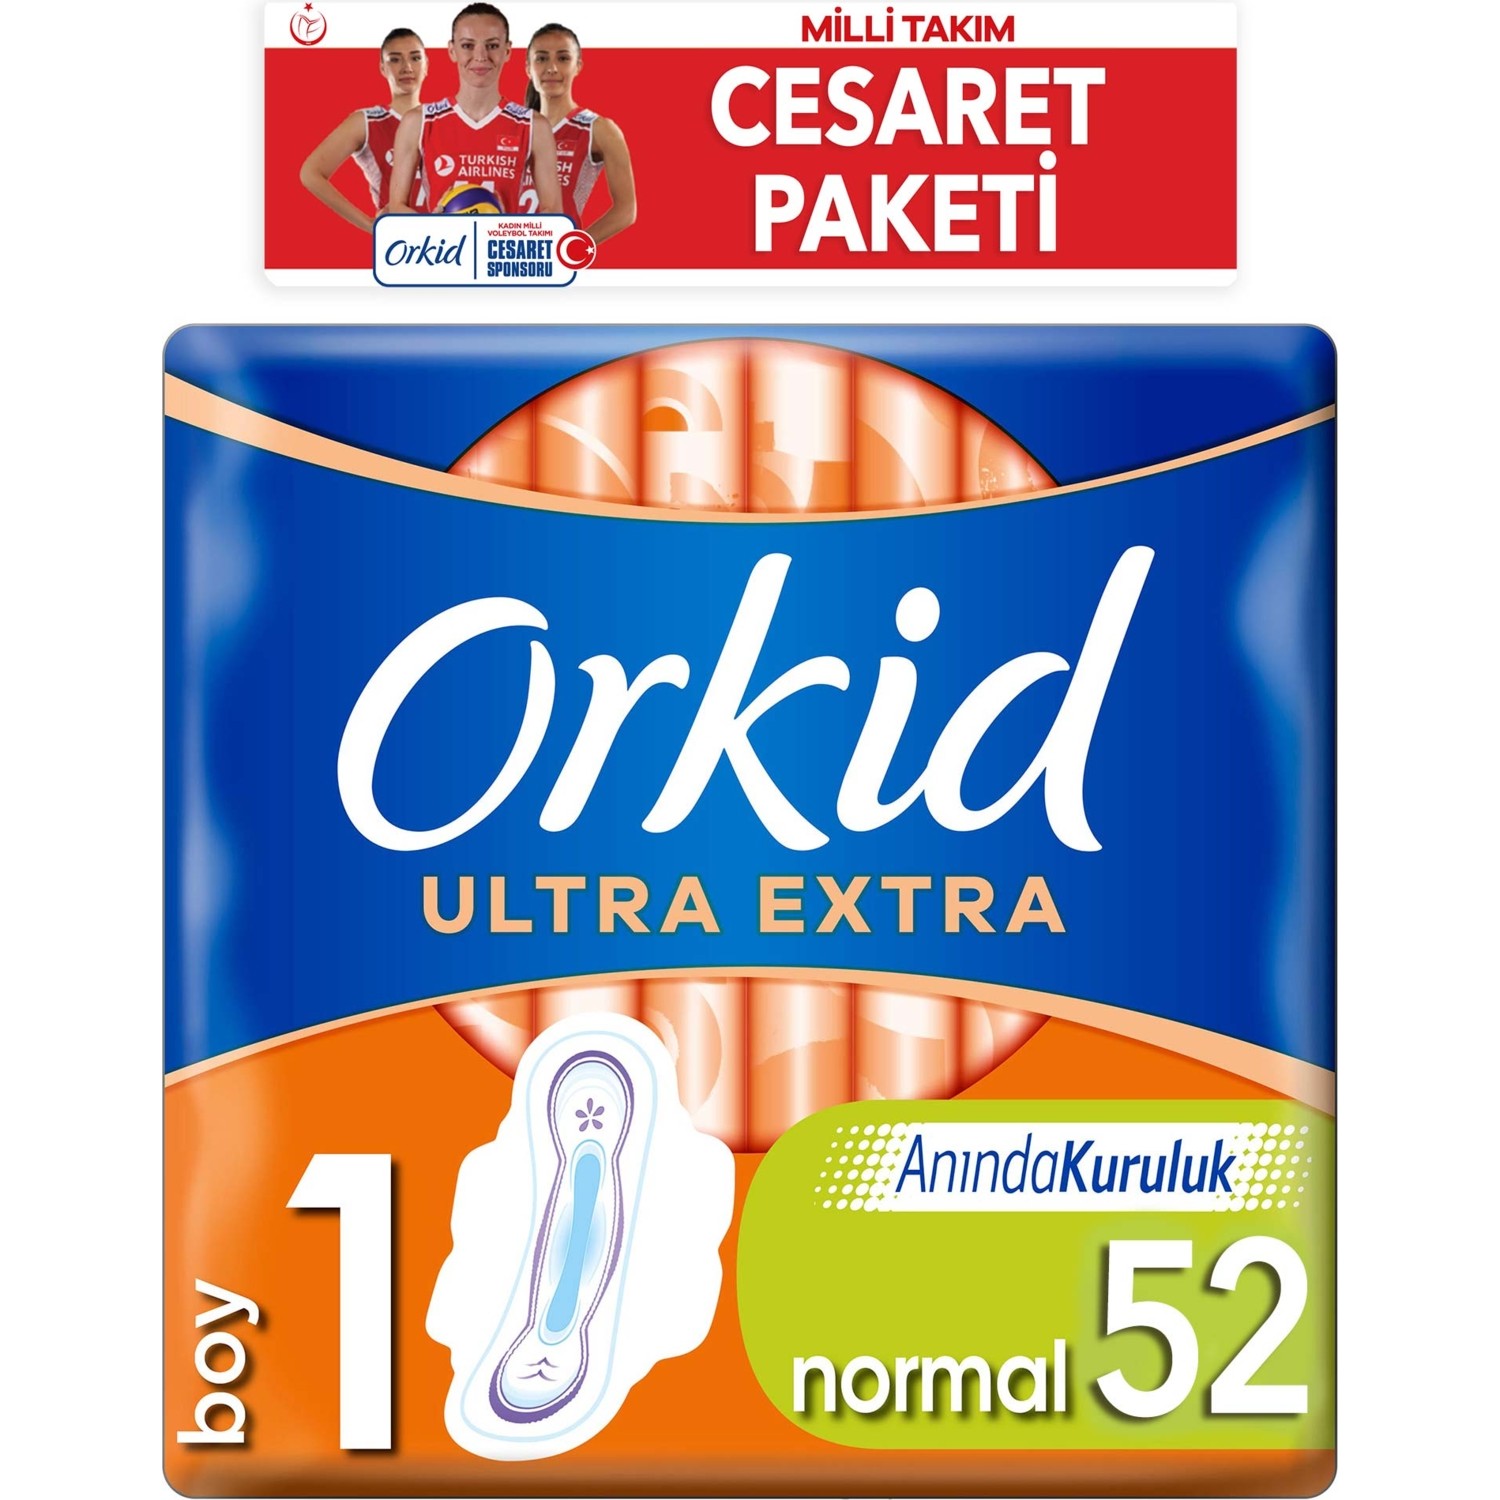 Orkid Ultra Extra Cesaret Paketi Normal Ped 52x5 260 Adet